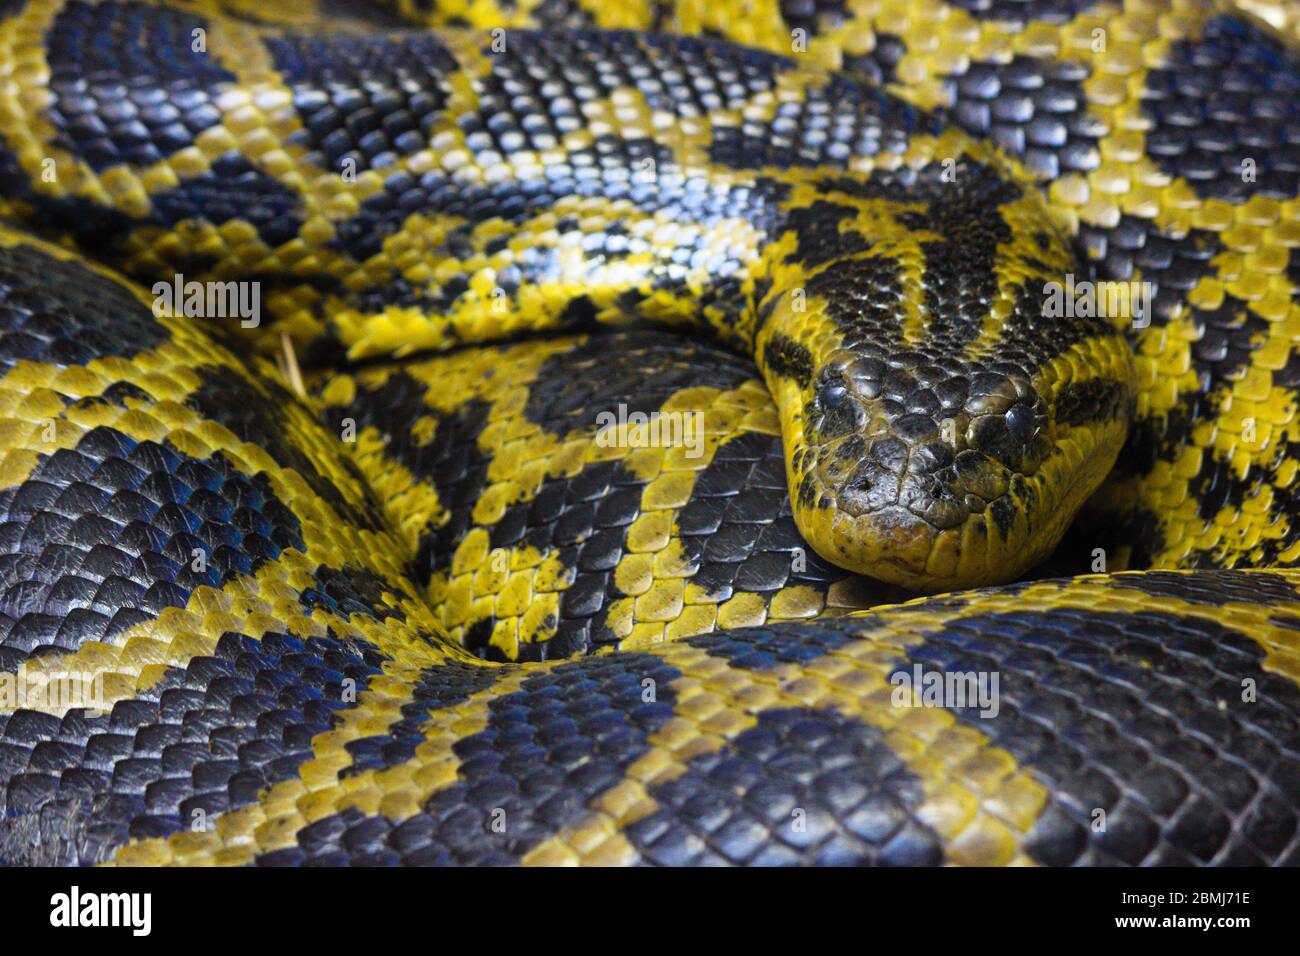 Large Curled Burmese Python Snake (Python bivittatus) Stock Photo